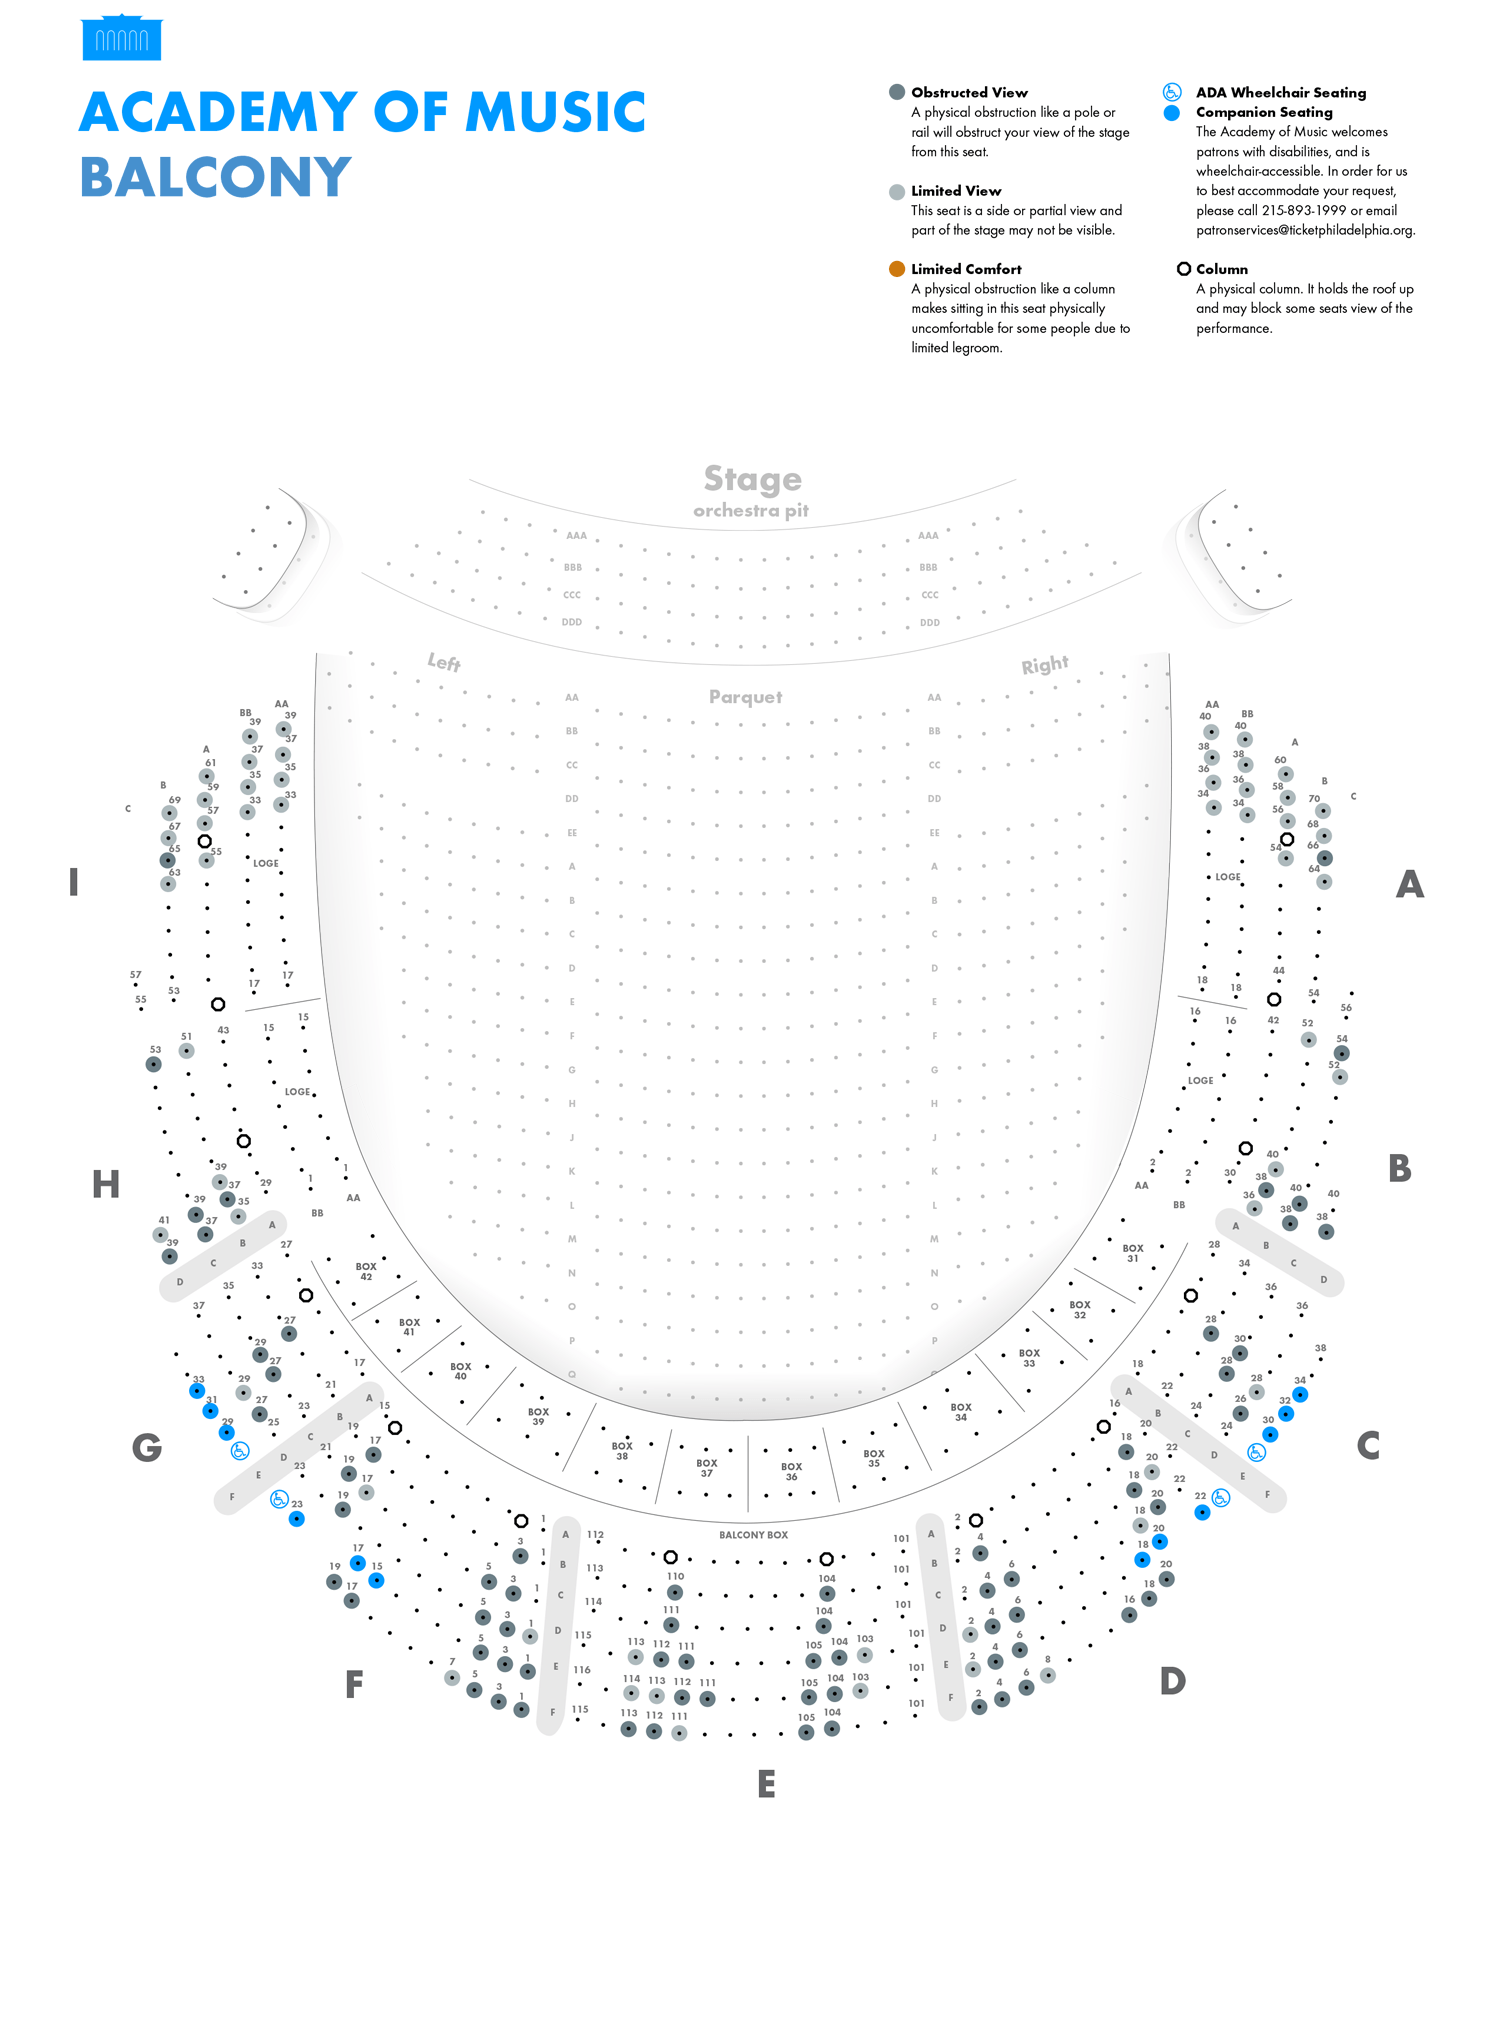 Academy Of Music Kimmel Center Seating Chart